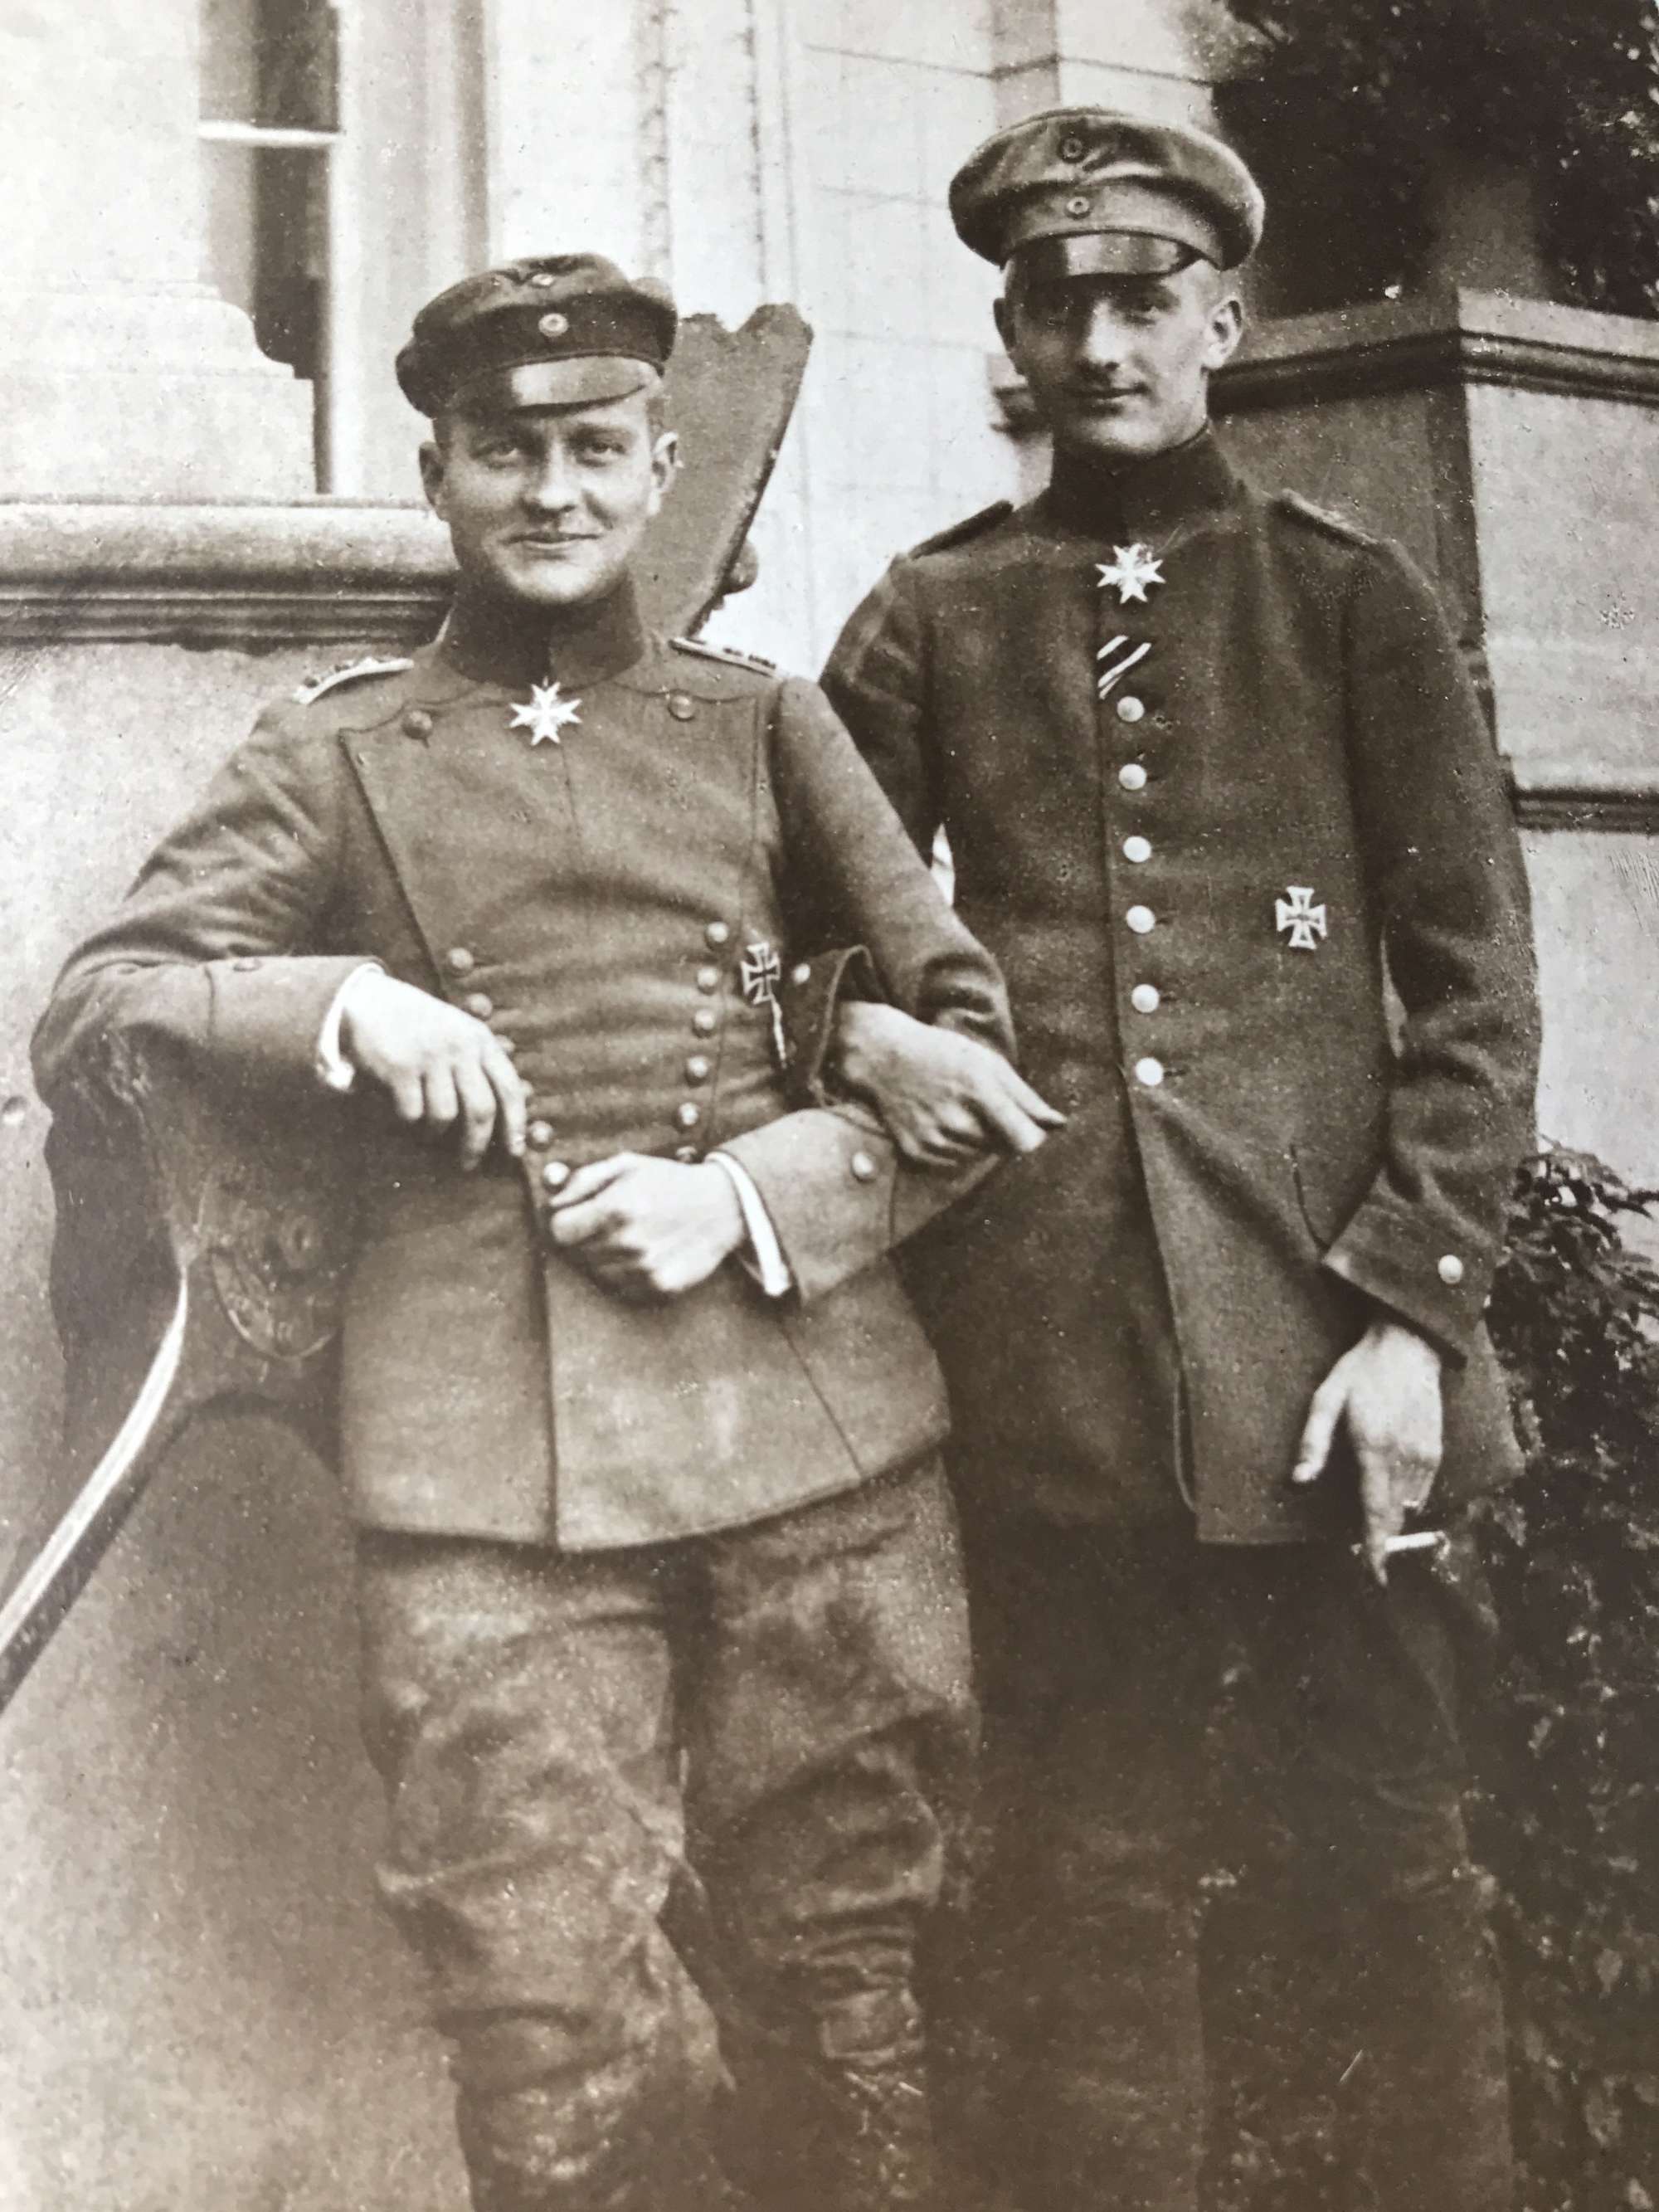 A Portrait postcard of the von Richthofen Brothers